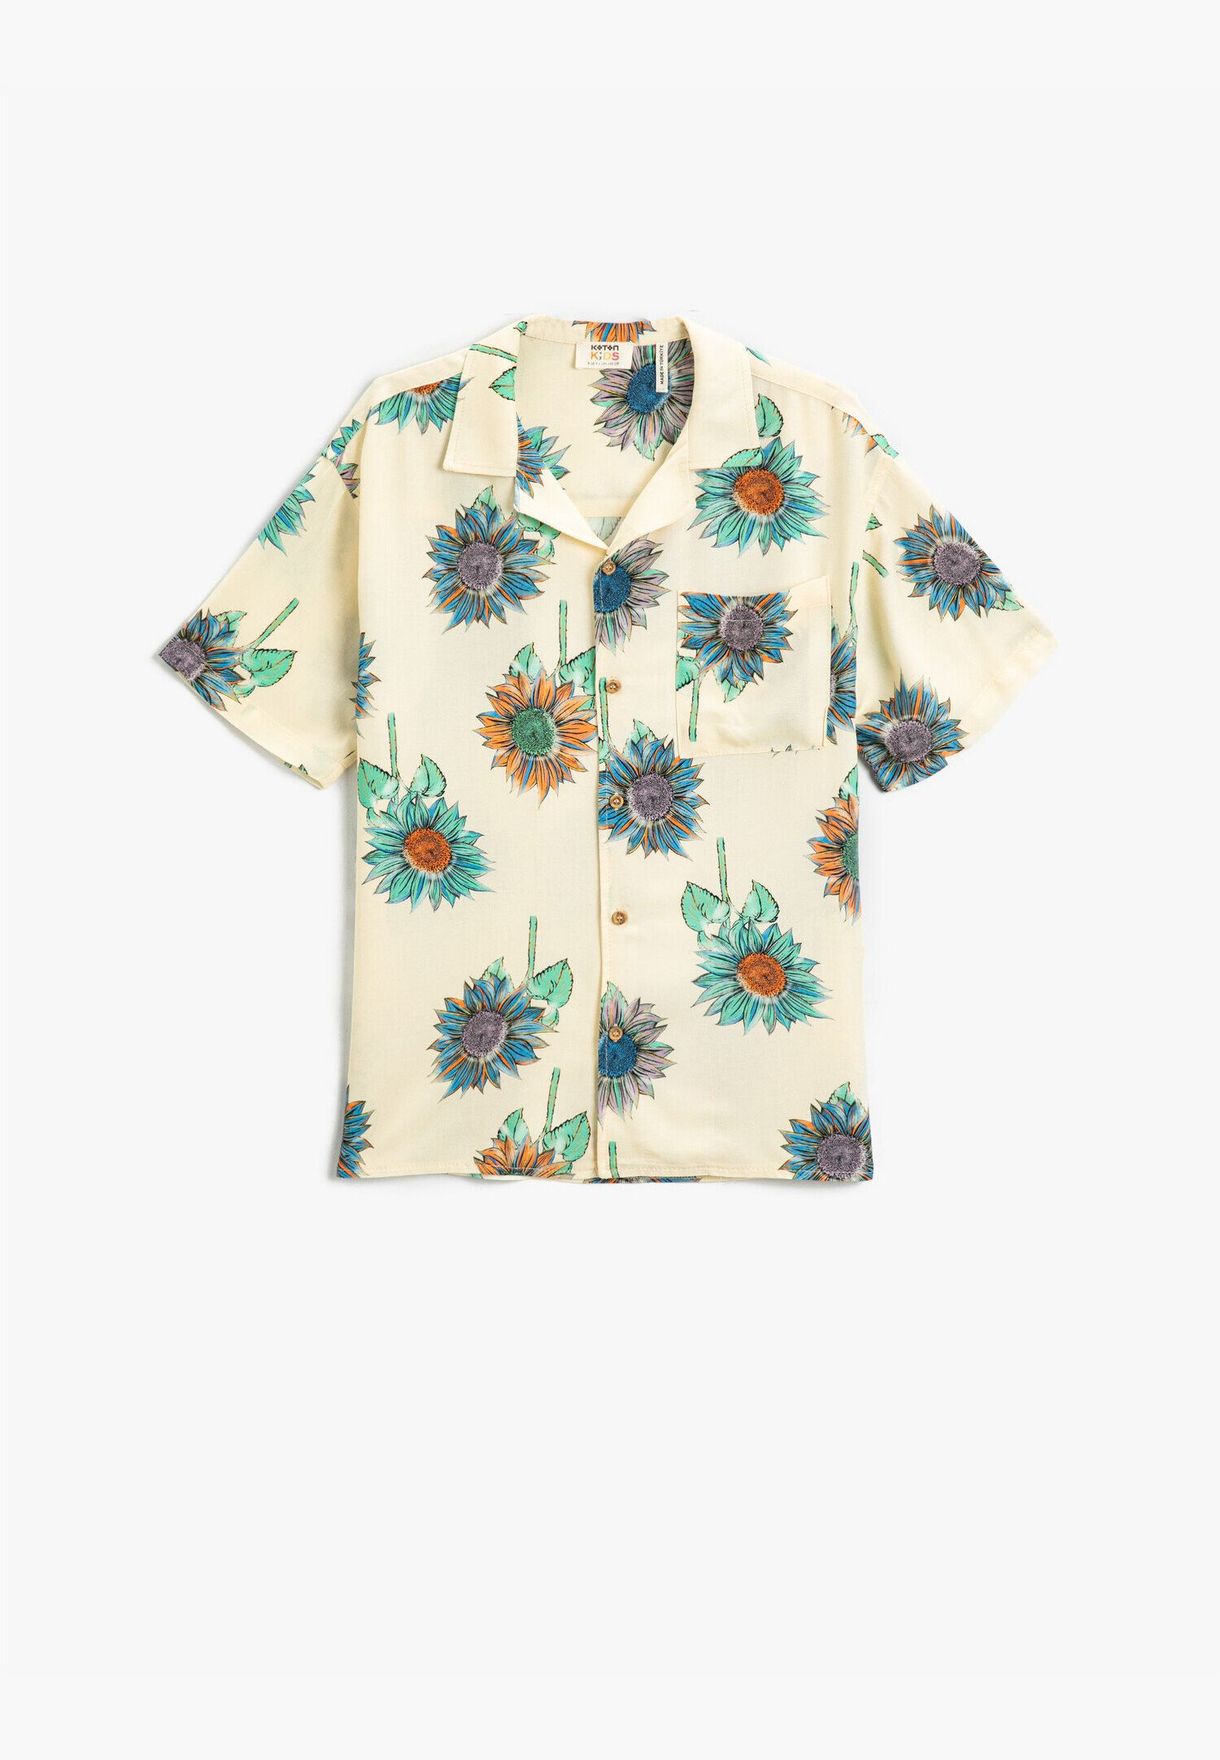 Sunflower Patterned Shirt Short Sleeve